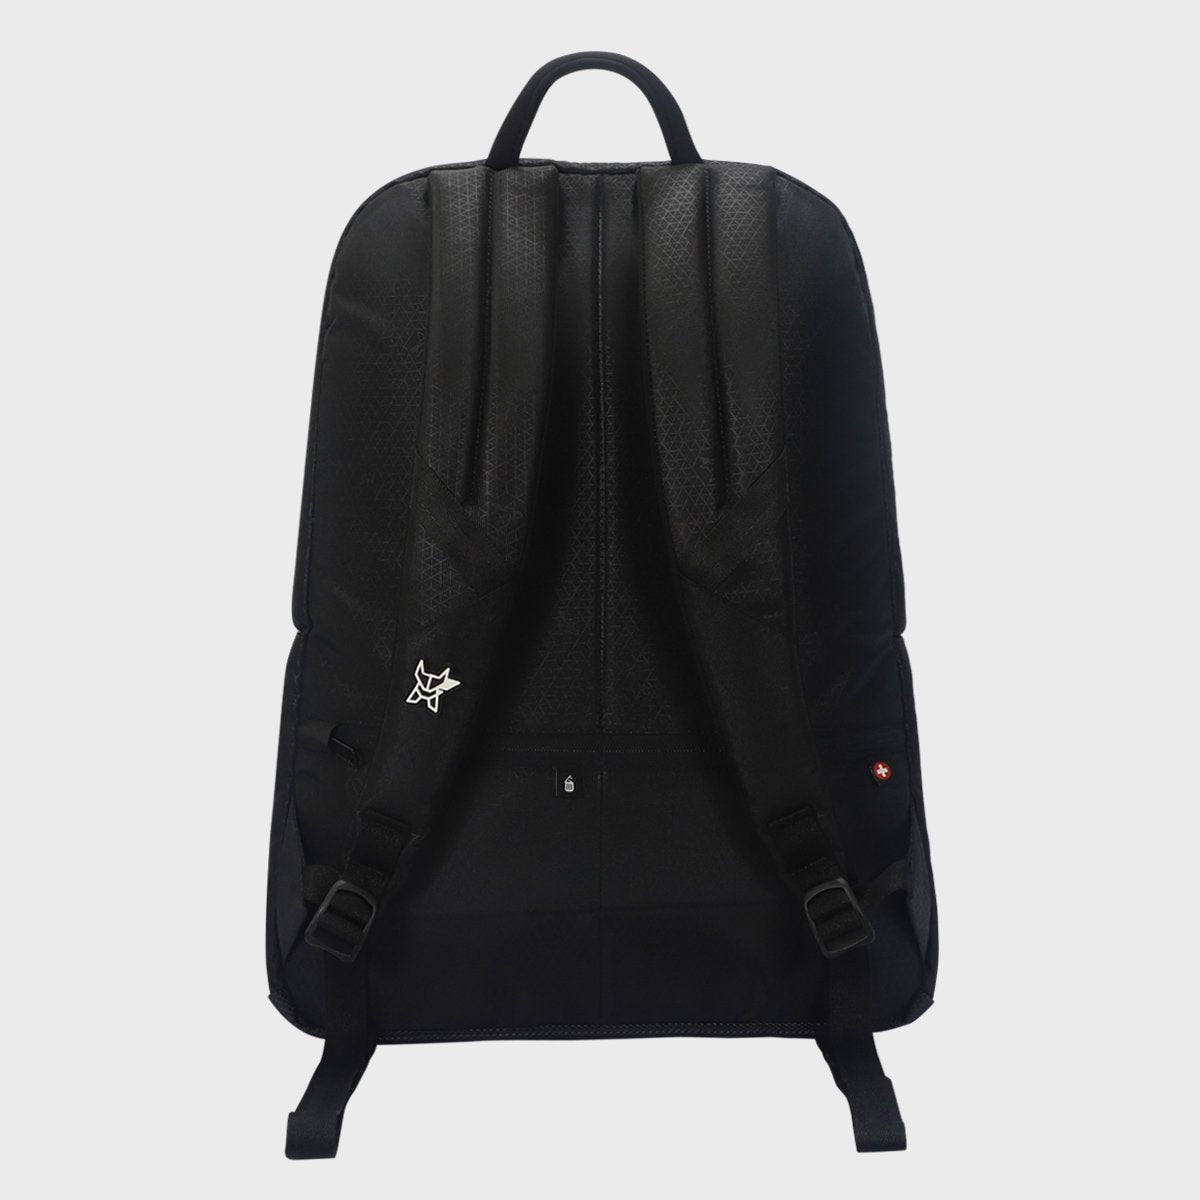 Arctic Fox Chrome Black Laptop bag and Backpack - back